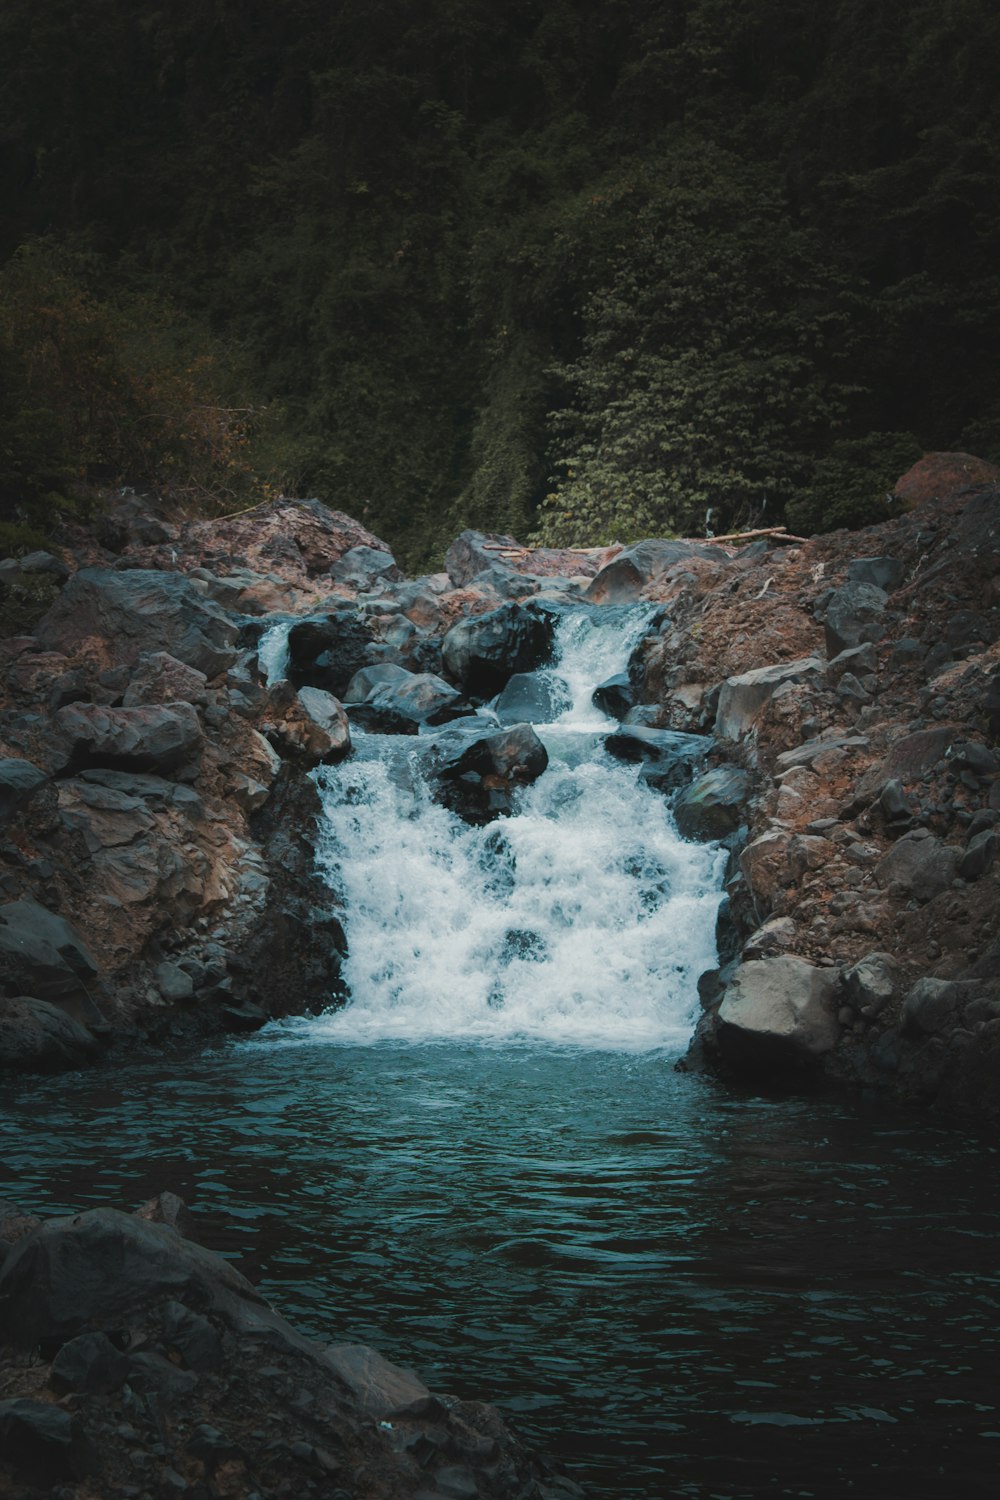 a river flowing through rocks